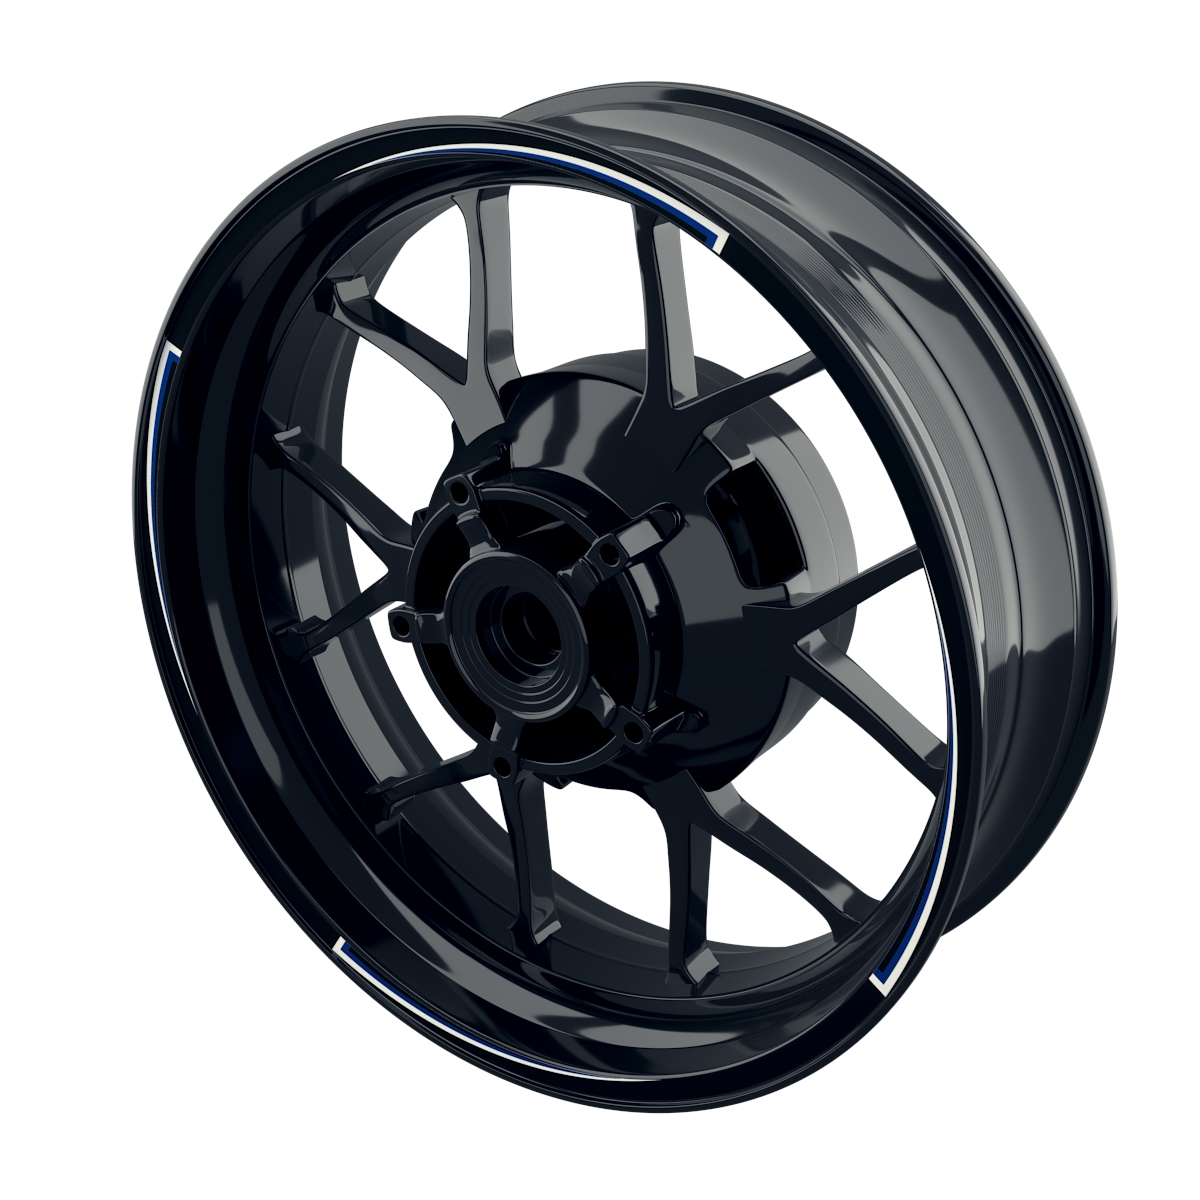 Swoosh black Rim Stripes Premium Wheelsticker